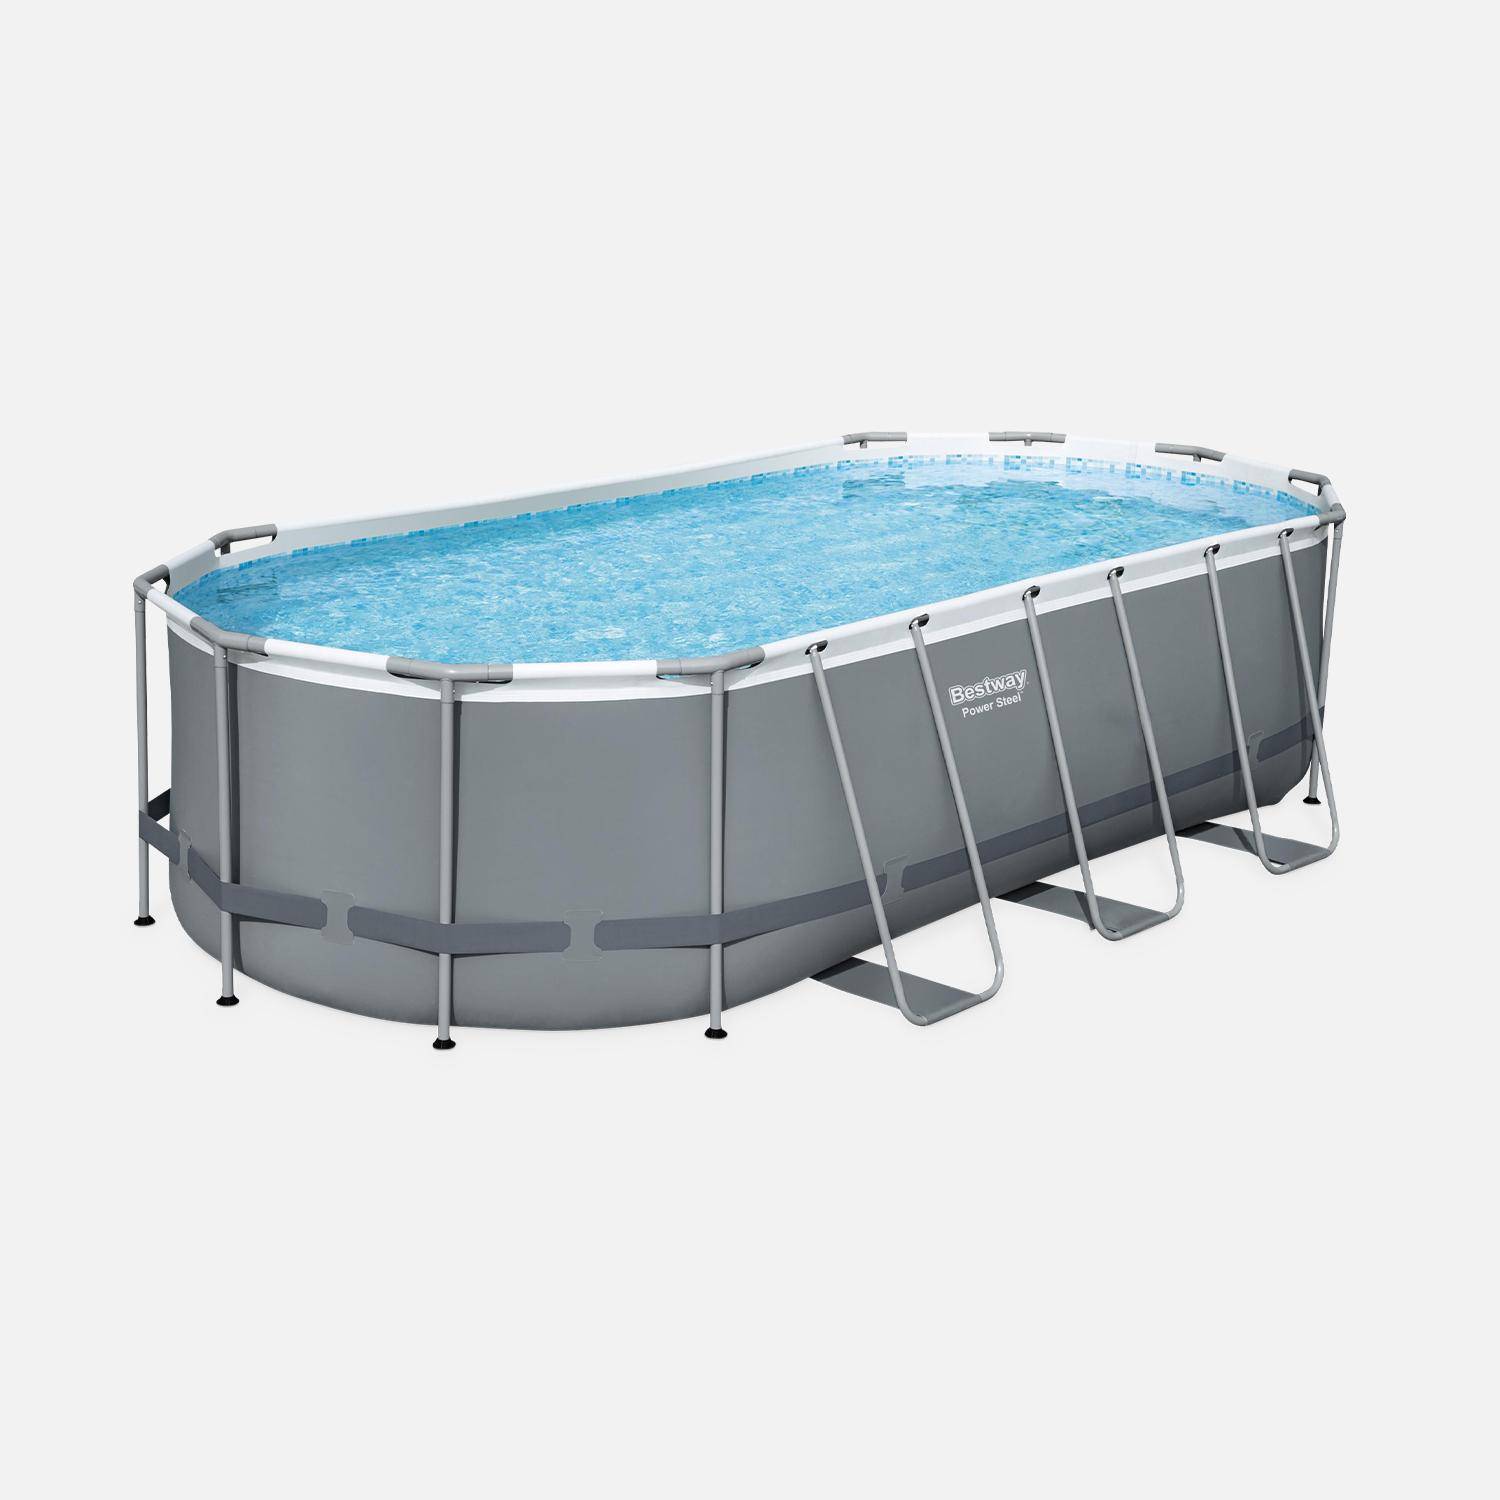 Kit de piscina desmontable BESTWAY - Spinelle gris - piscina tubular ovalada de 5x3 m, bomba de filtración, escalera, lona, difusor químico ChemConnect, estructura de acero para piscinas sobre suelo Photo2